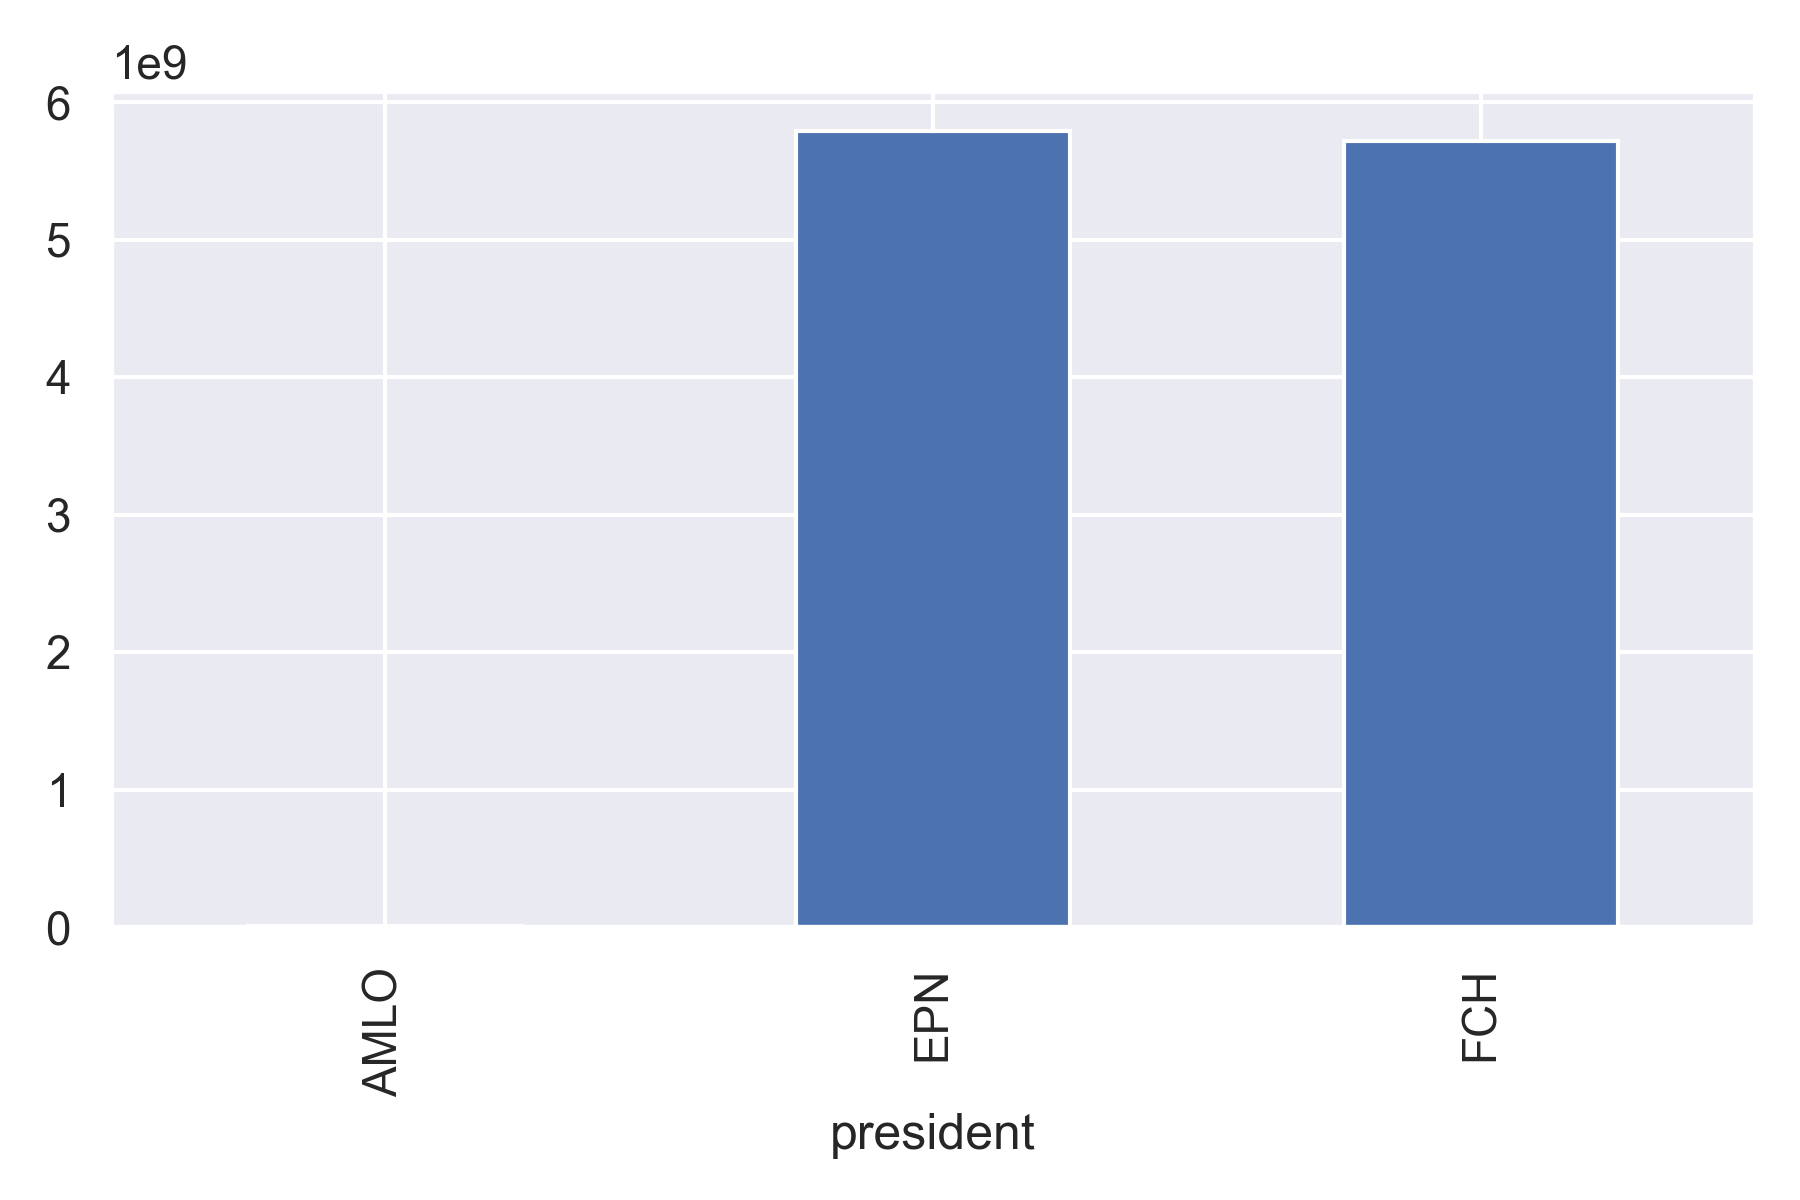 Figure 1: Amount forgiven per president